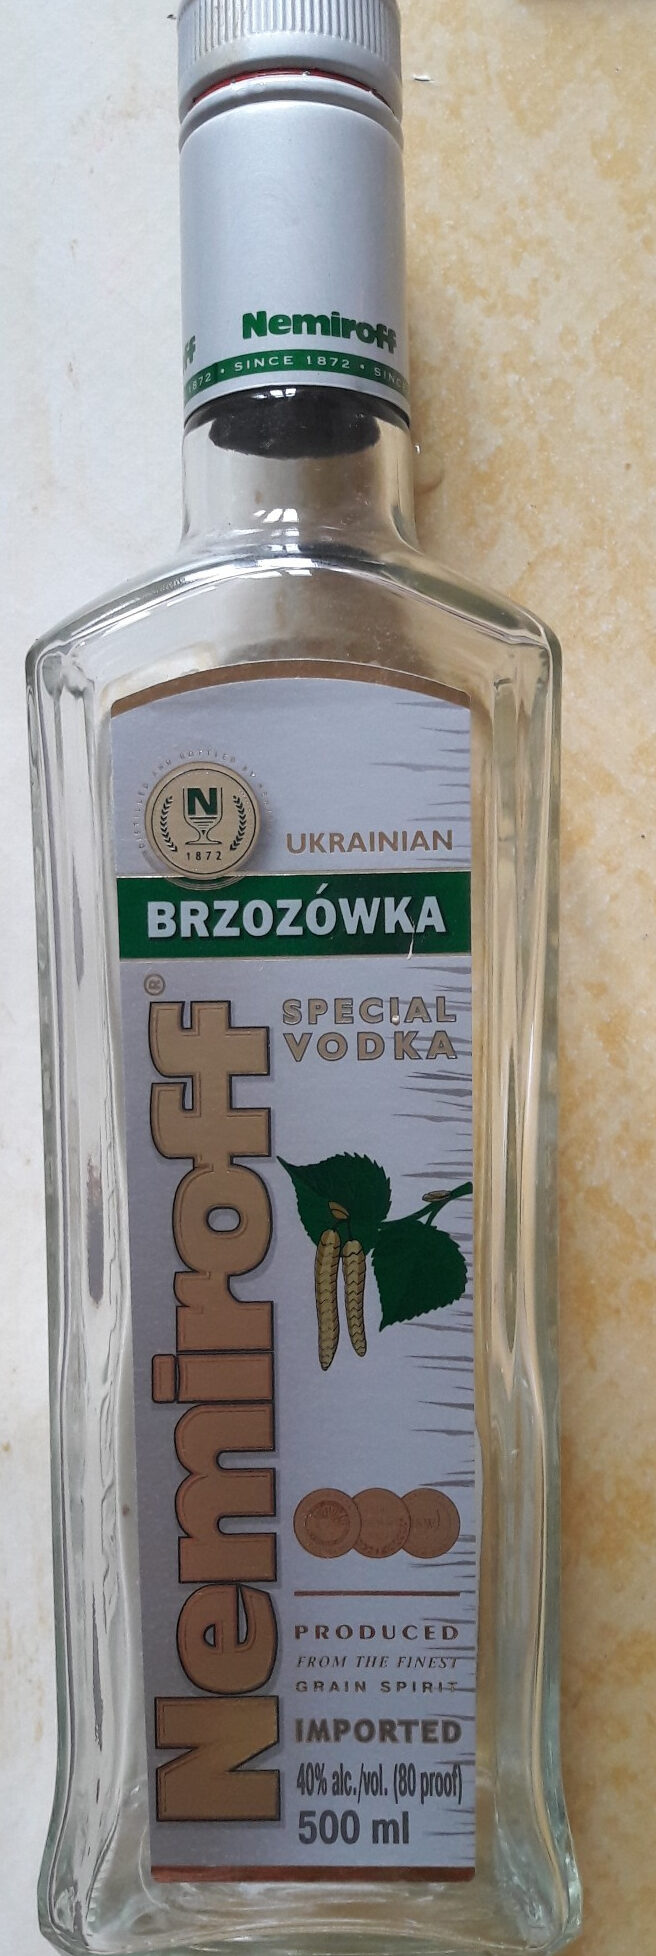 spécial vodka  1872 - Product - fr